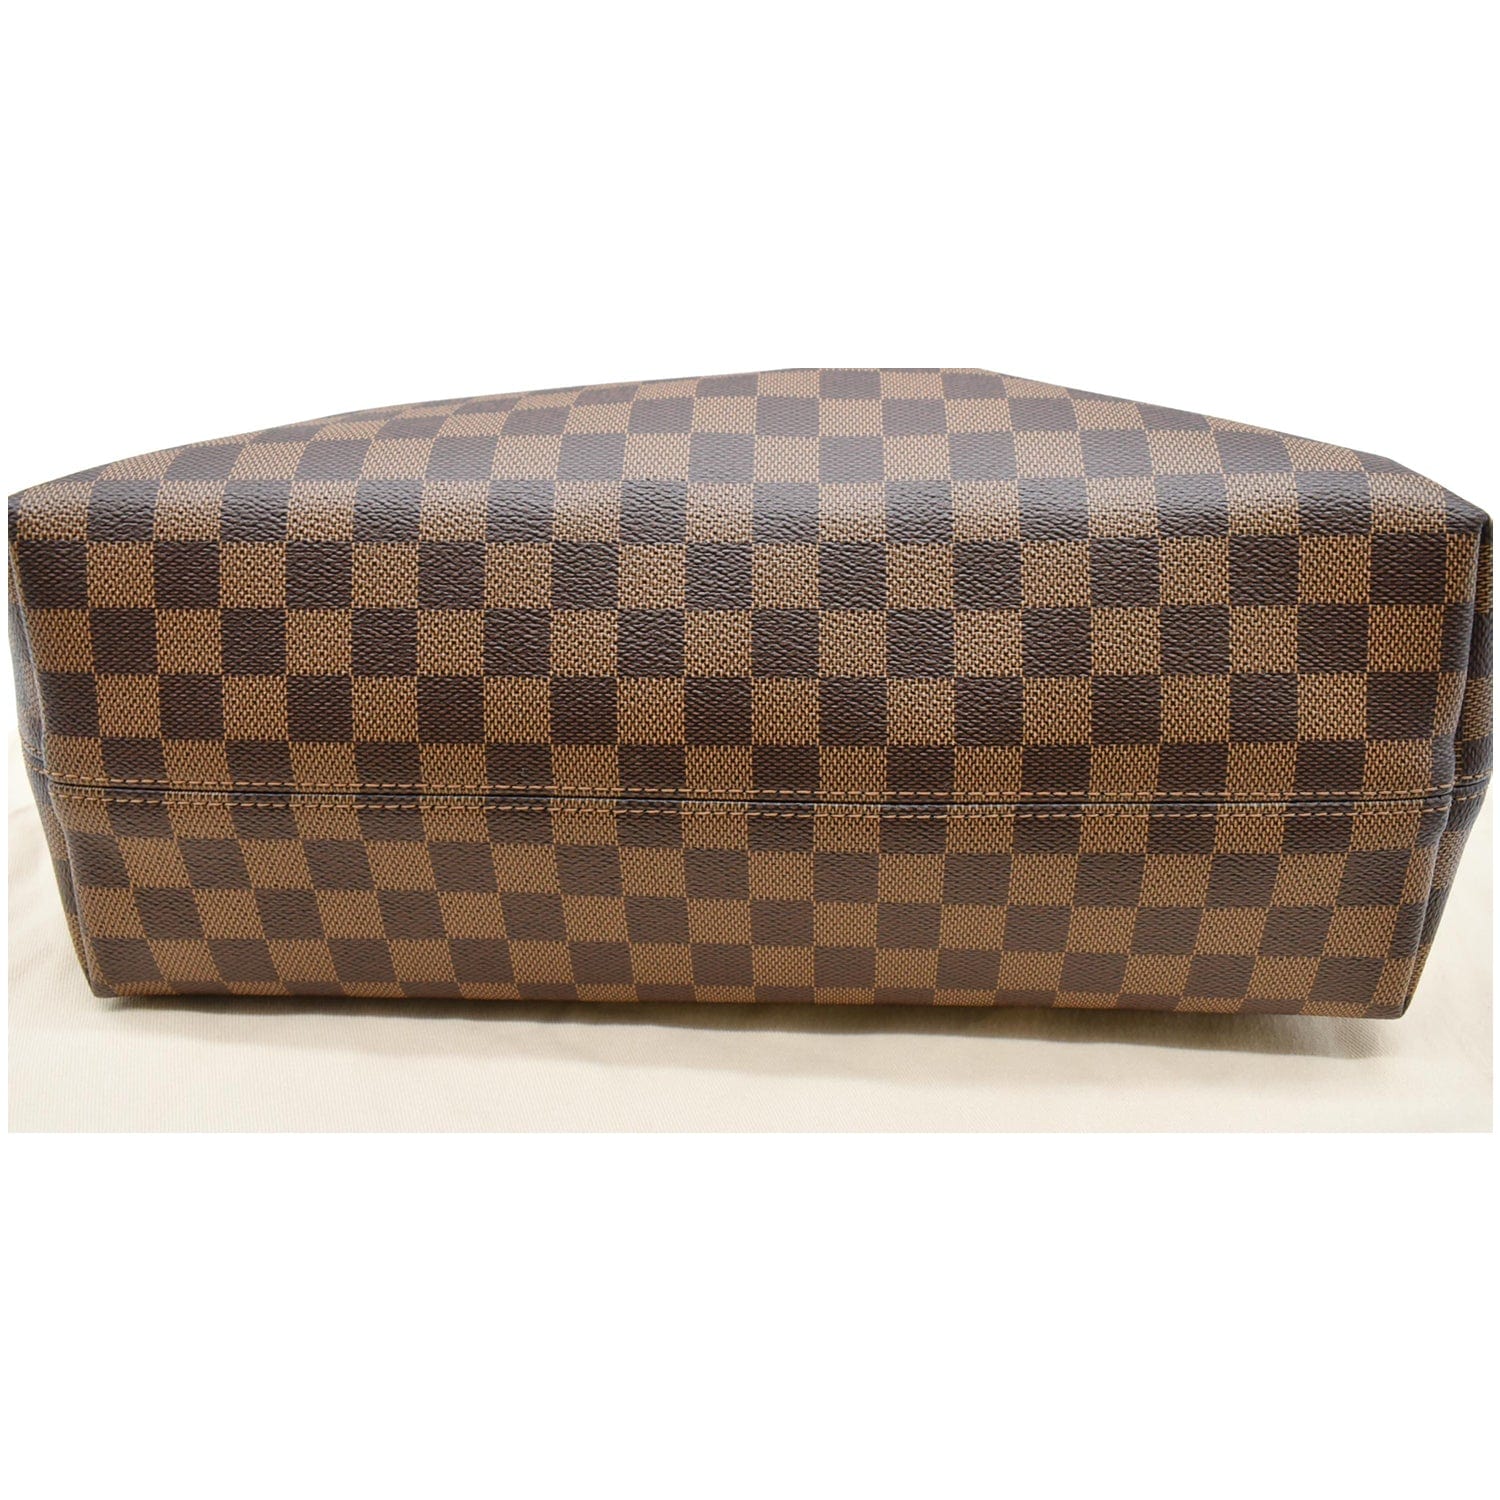 Louis Vuitton - Authenticated Graceful Handbag - Brown for Women, Good Condition